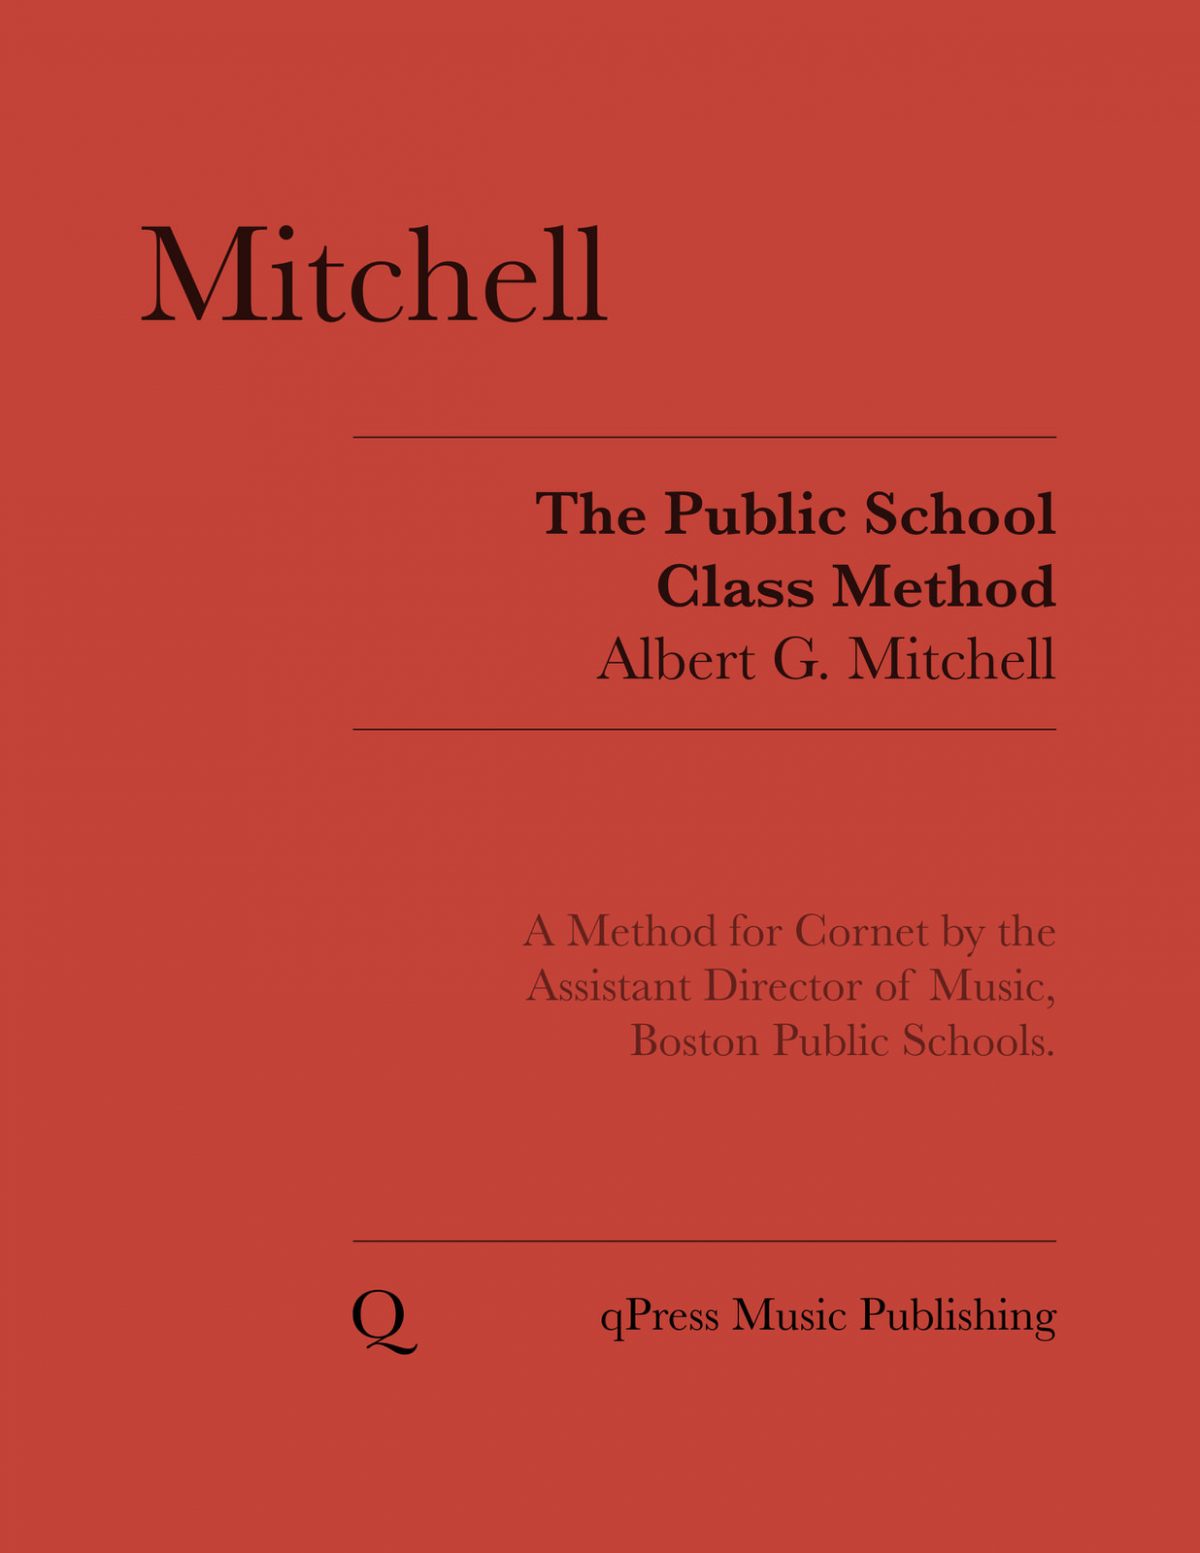 Mitchell, Public School Class Method for the Cornet